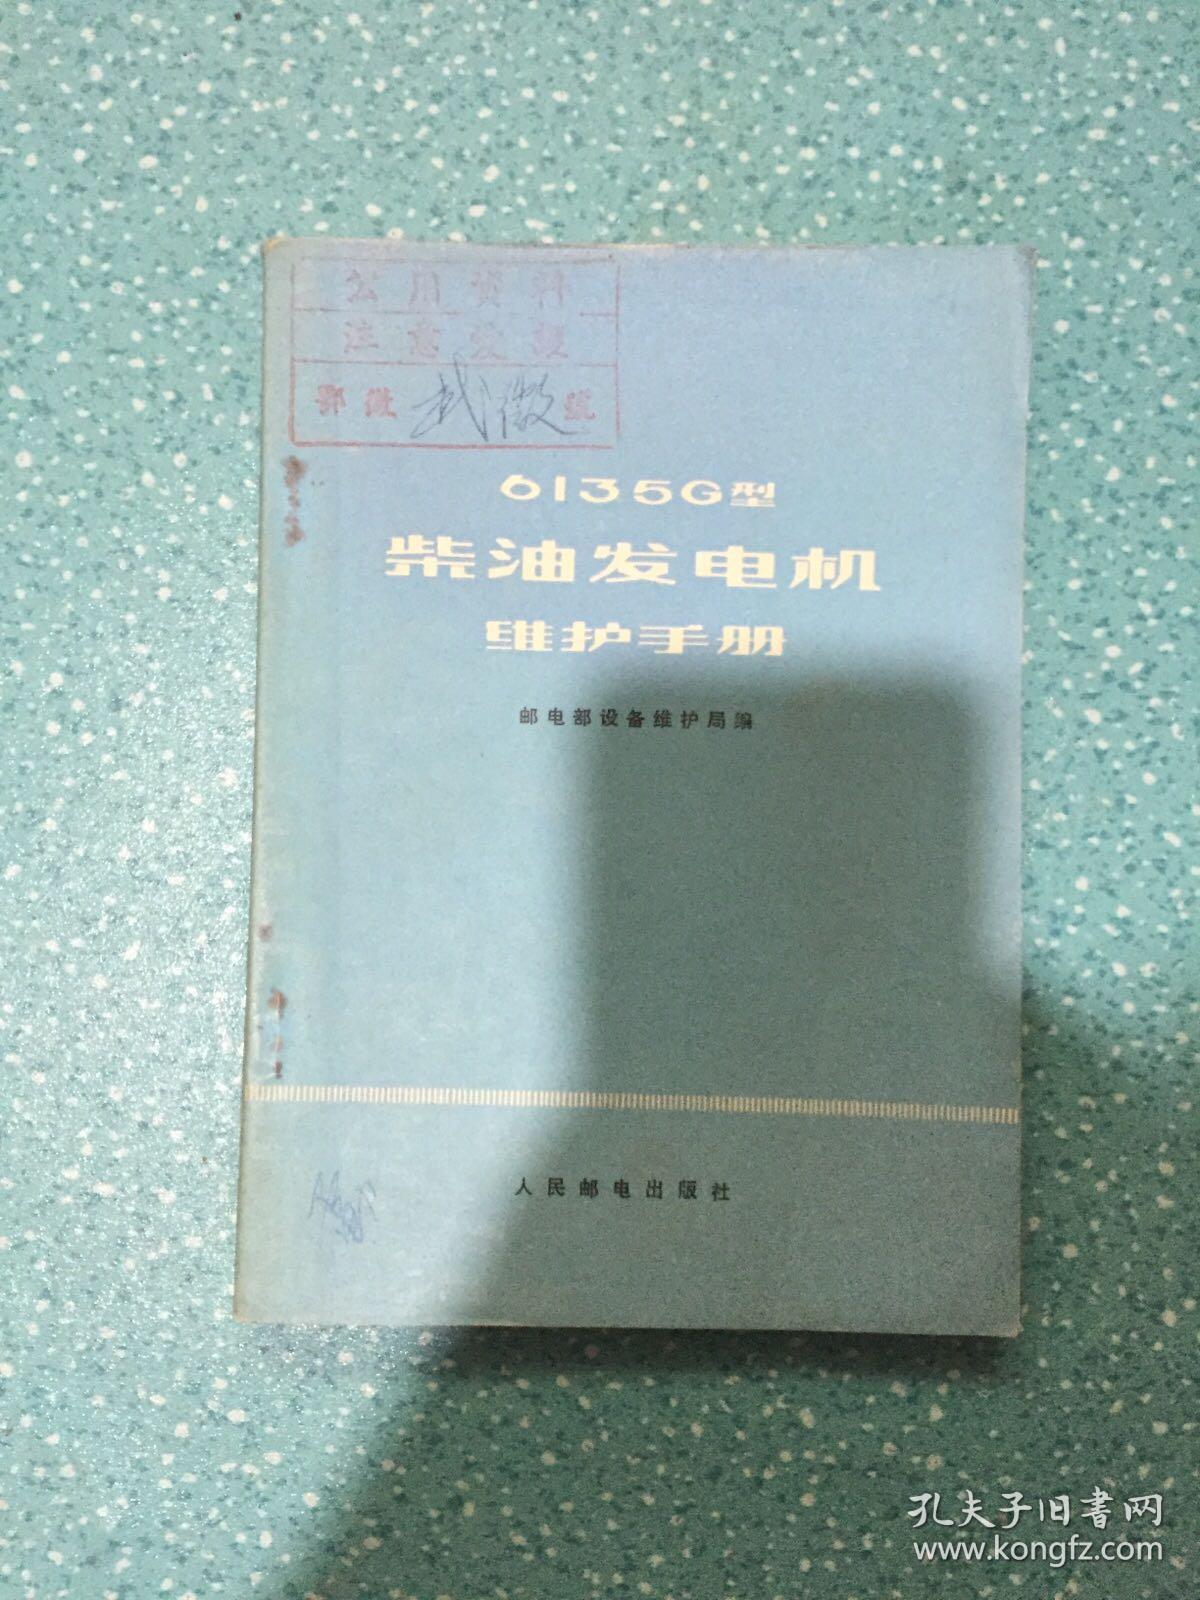 6135G型柴油发电机维护手册